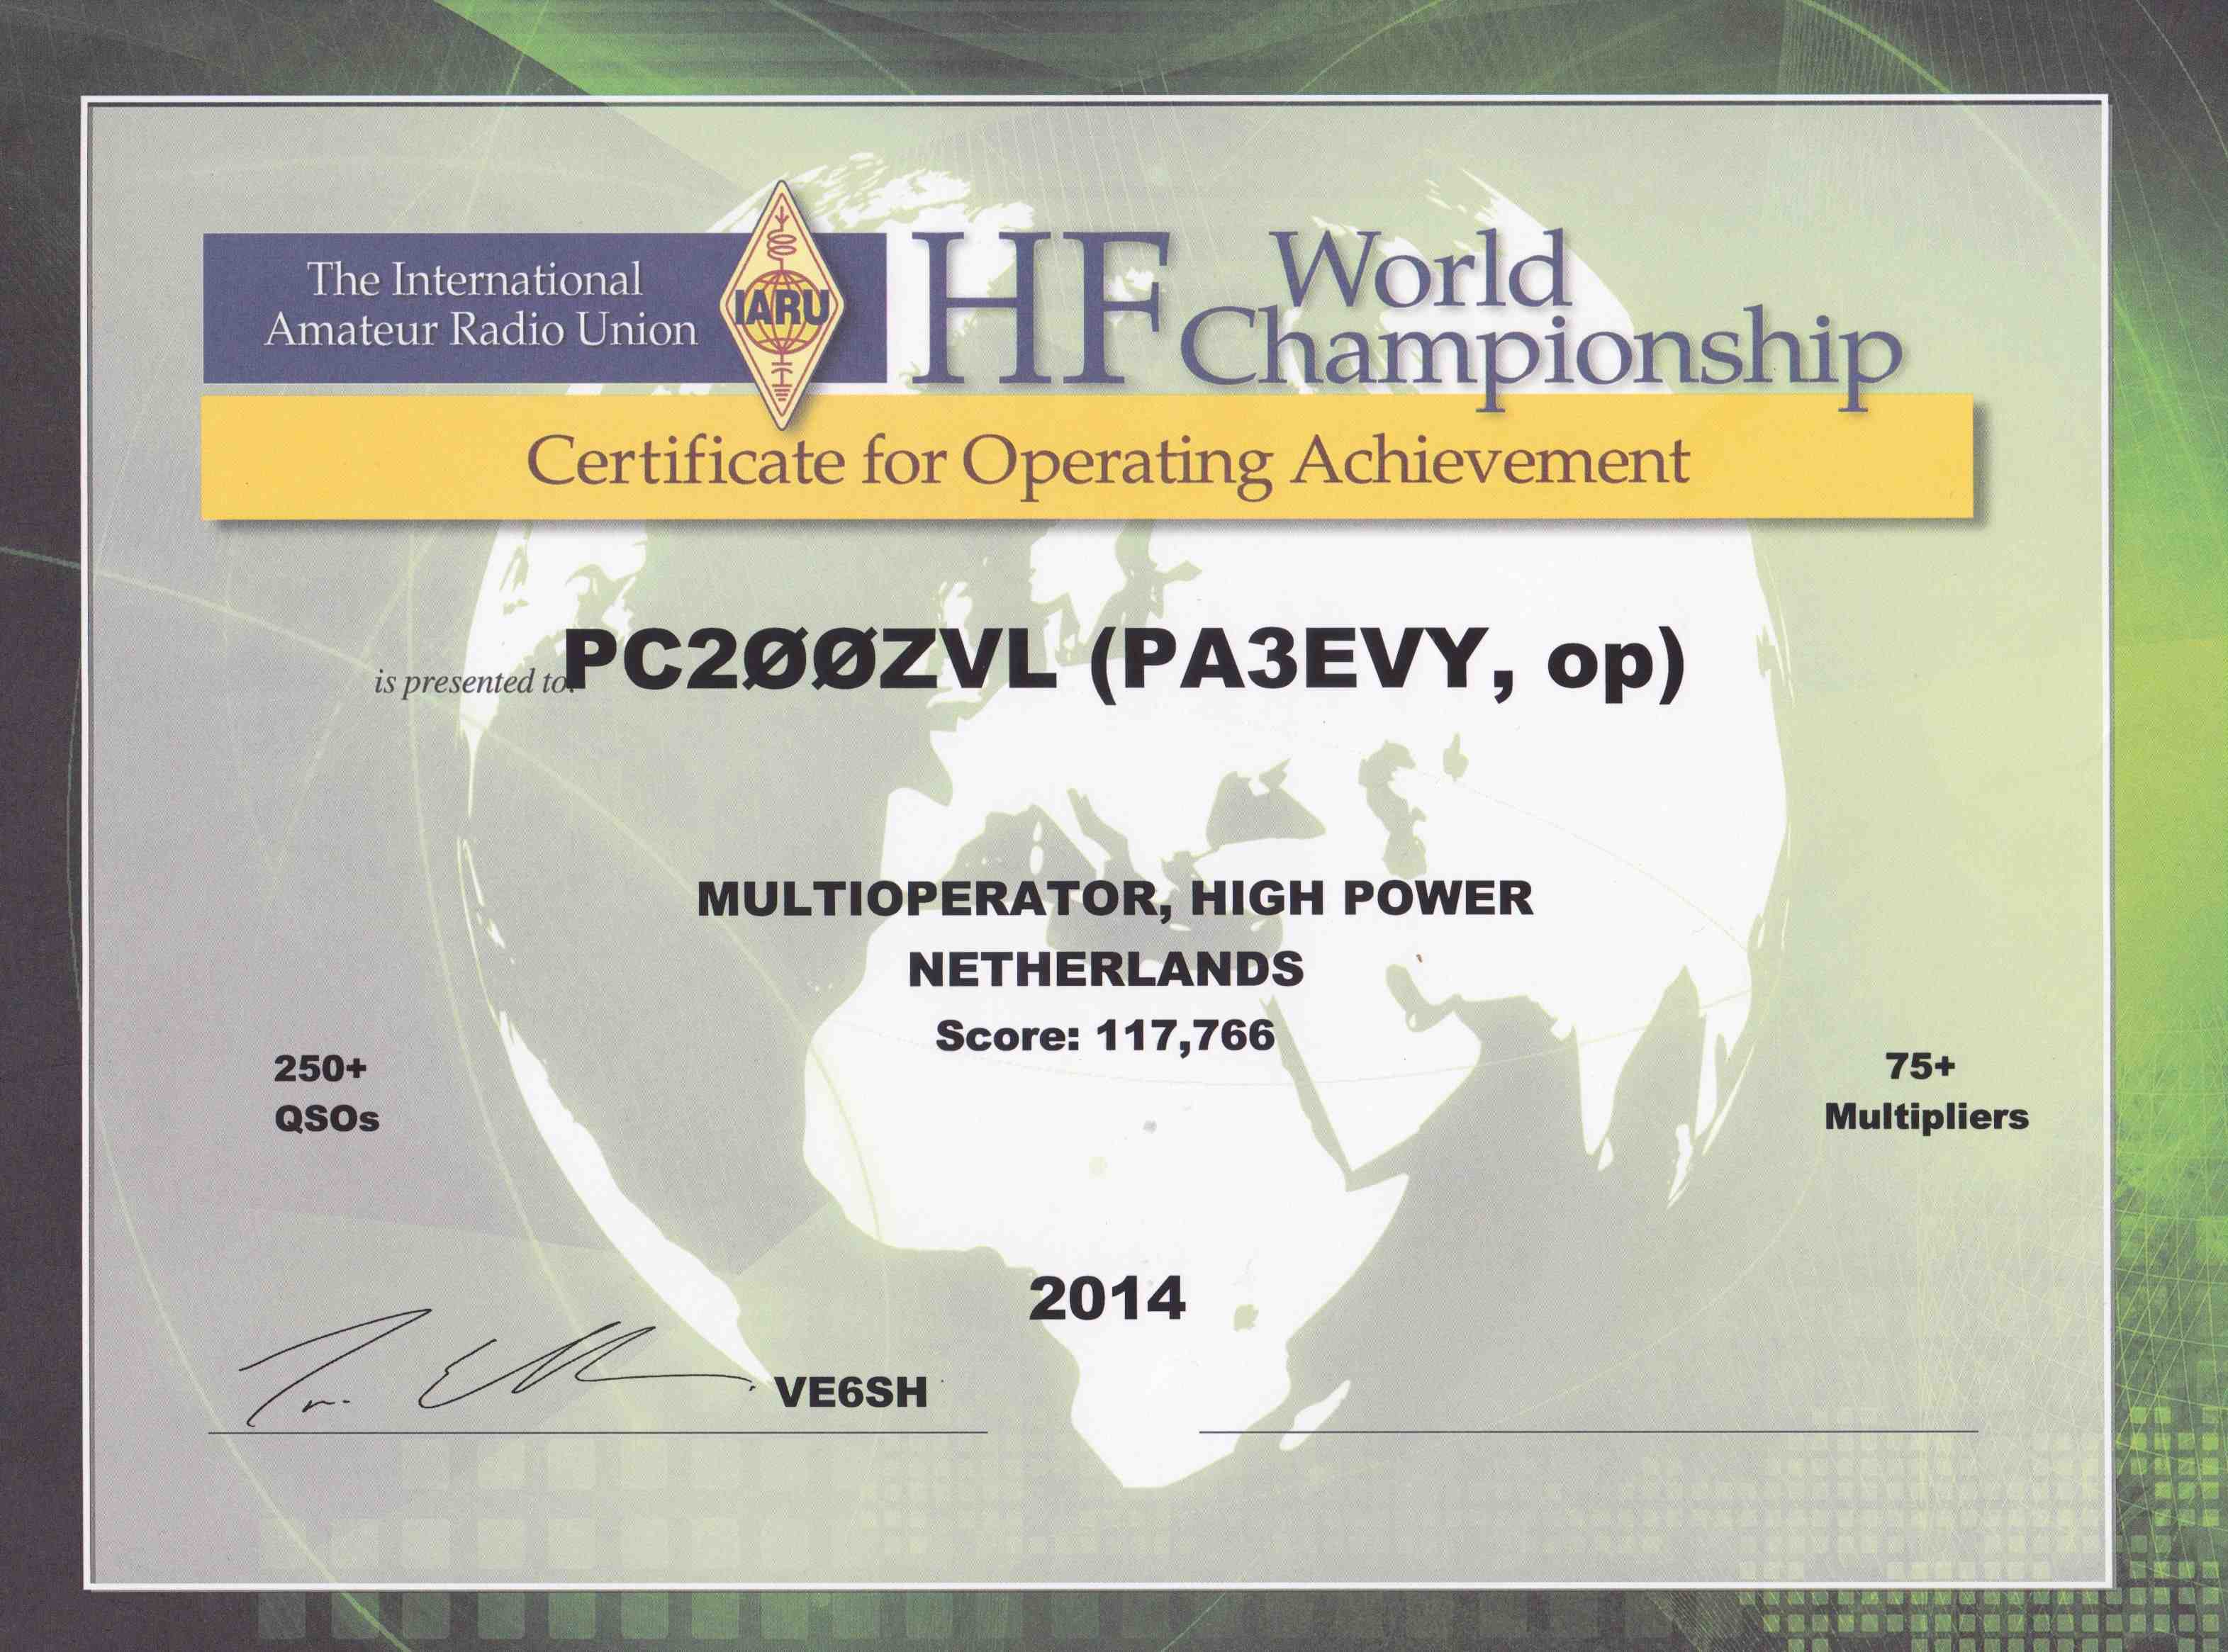 2014 HF W champion PC200ZVL low